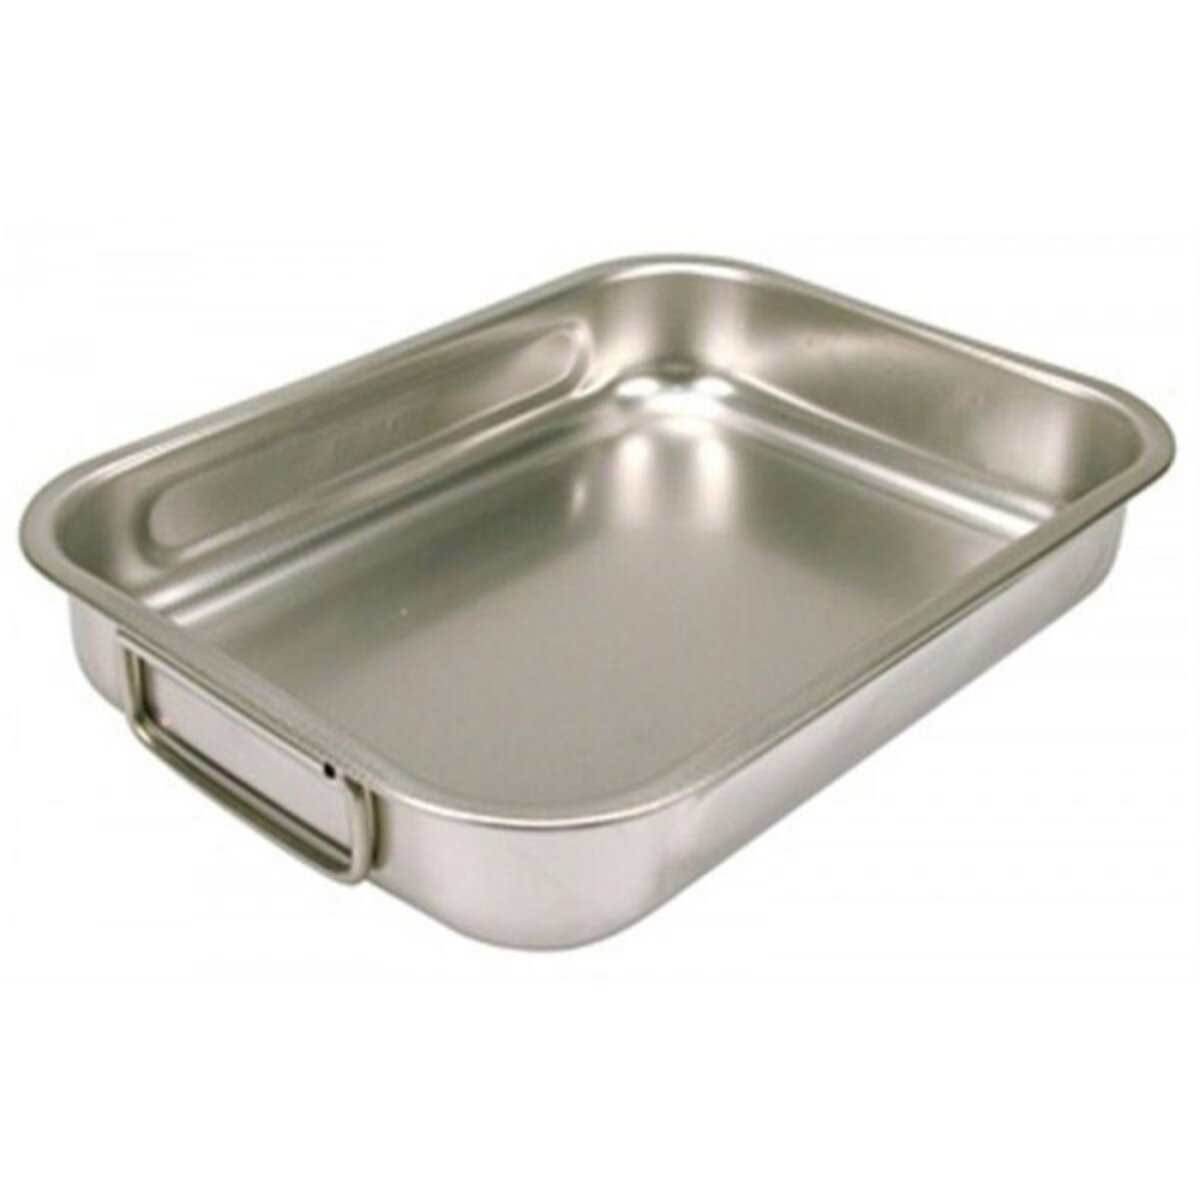 Steel pan Plat à four inox 35x26cm - 10182